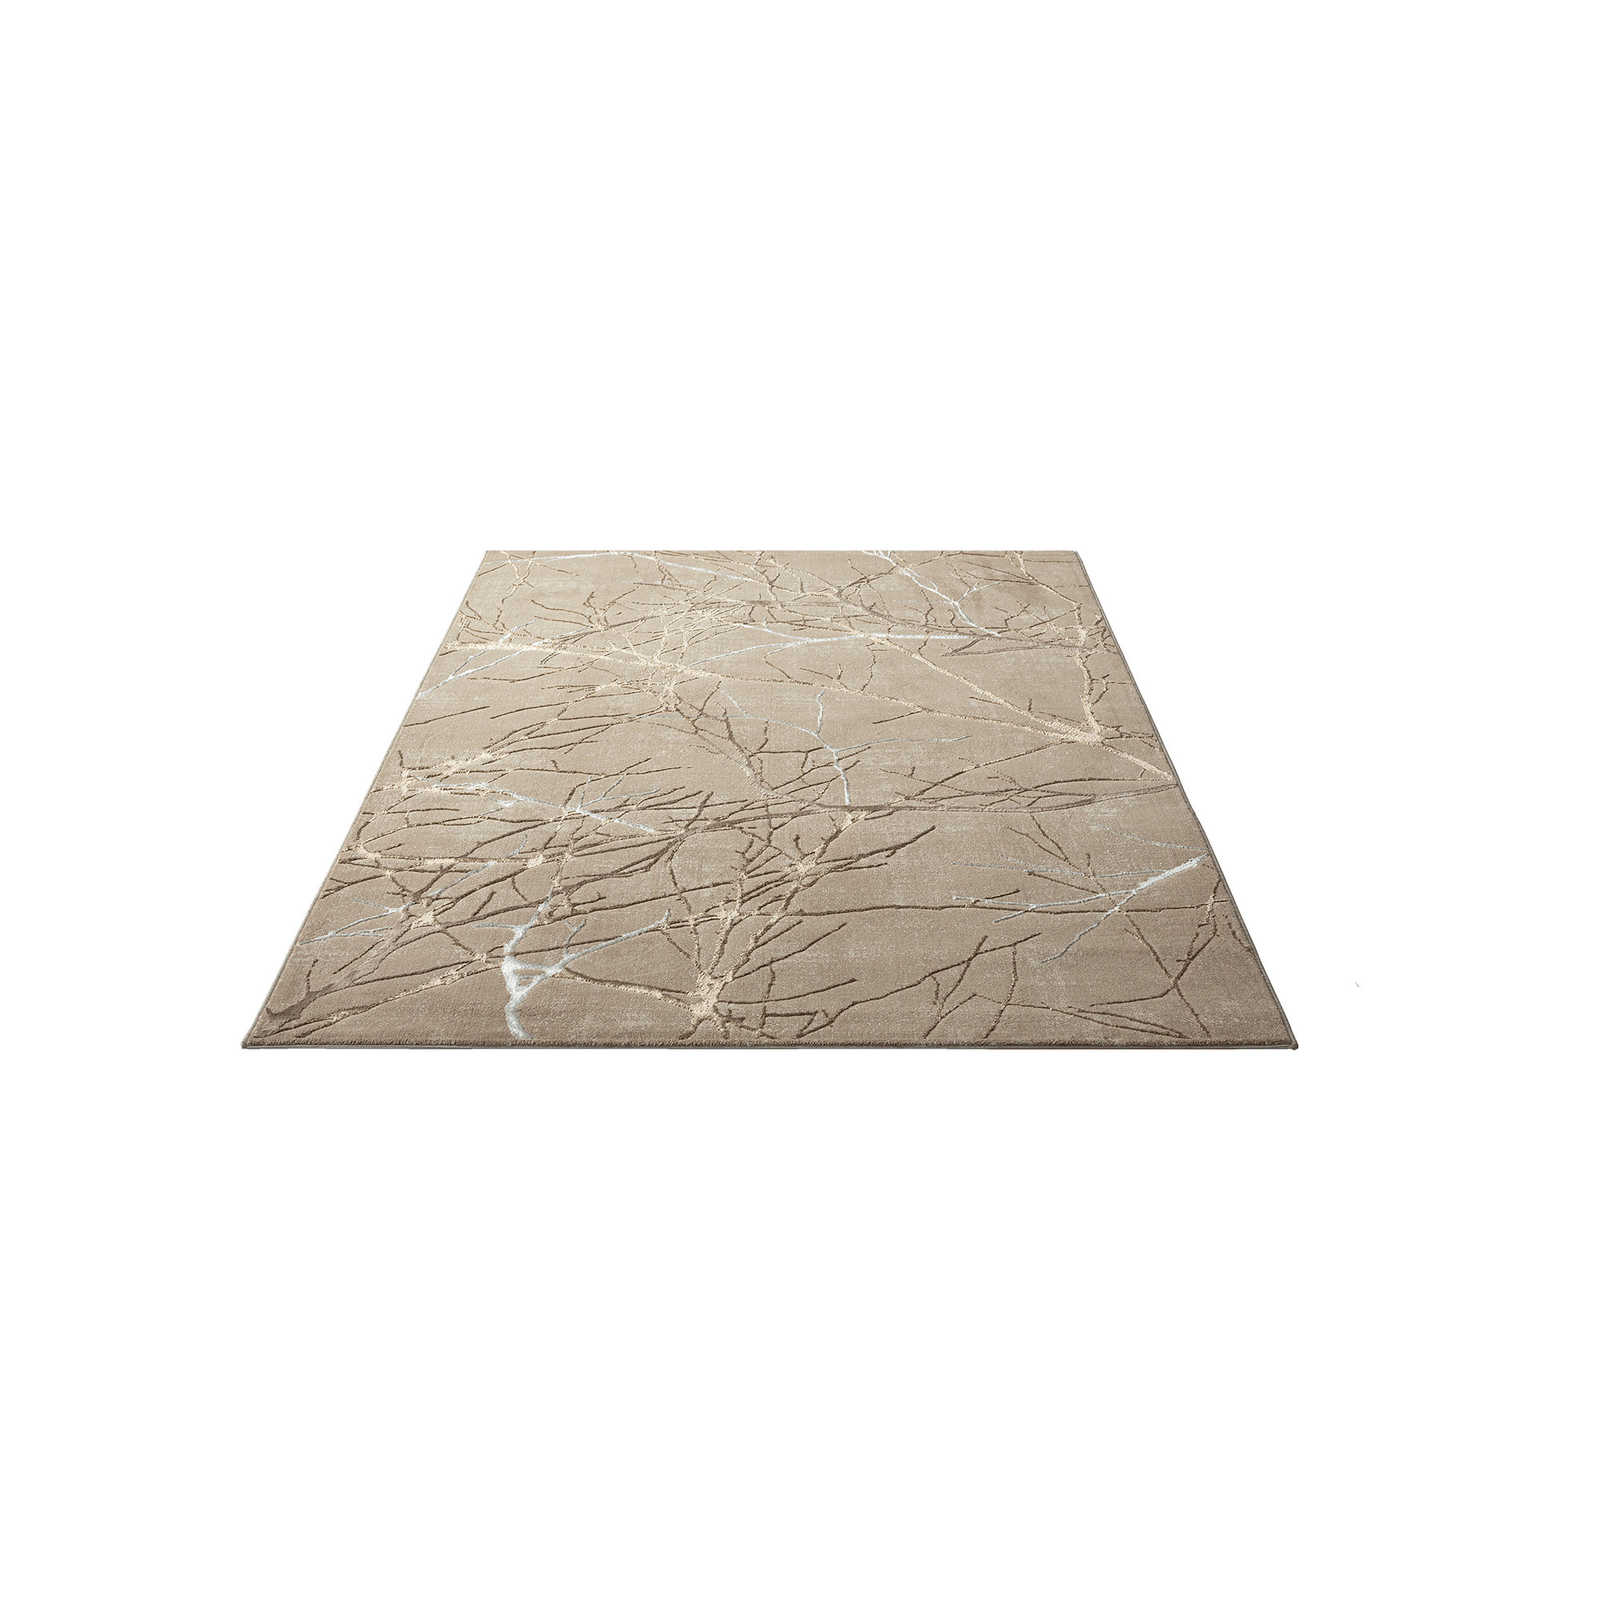 Pile carpet in soft beige - 200 x 140 cm
